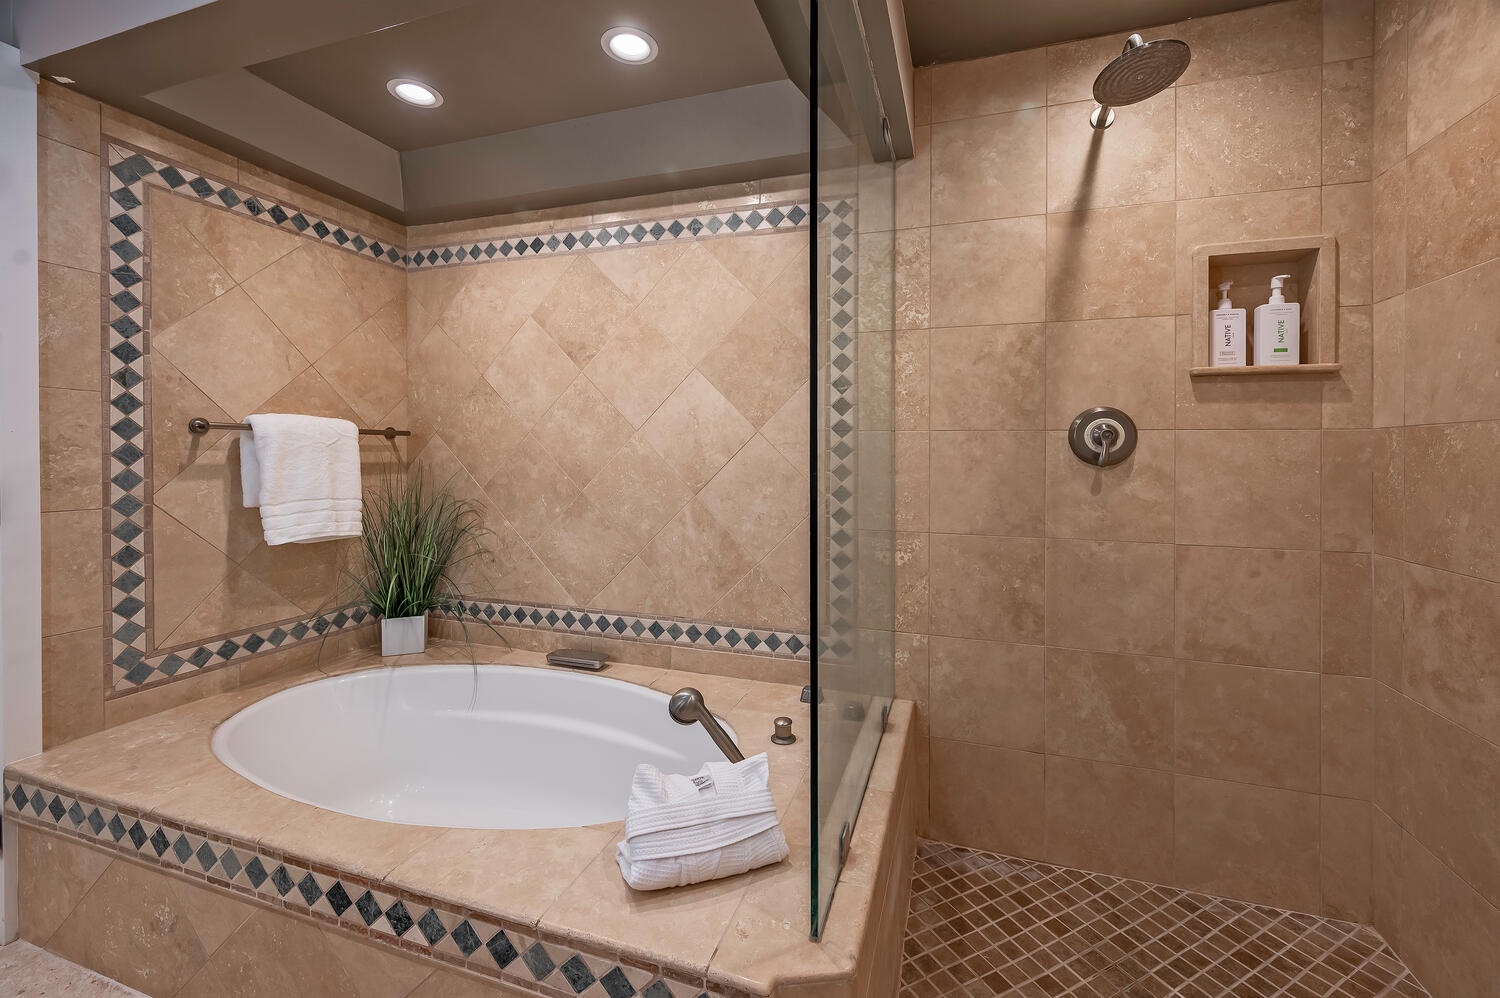 Kailua Vacation Rentals, Hale Lani - Soaking tub and shower (bathroom for bedroom 2)